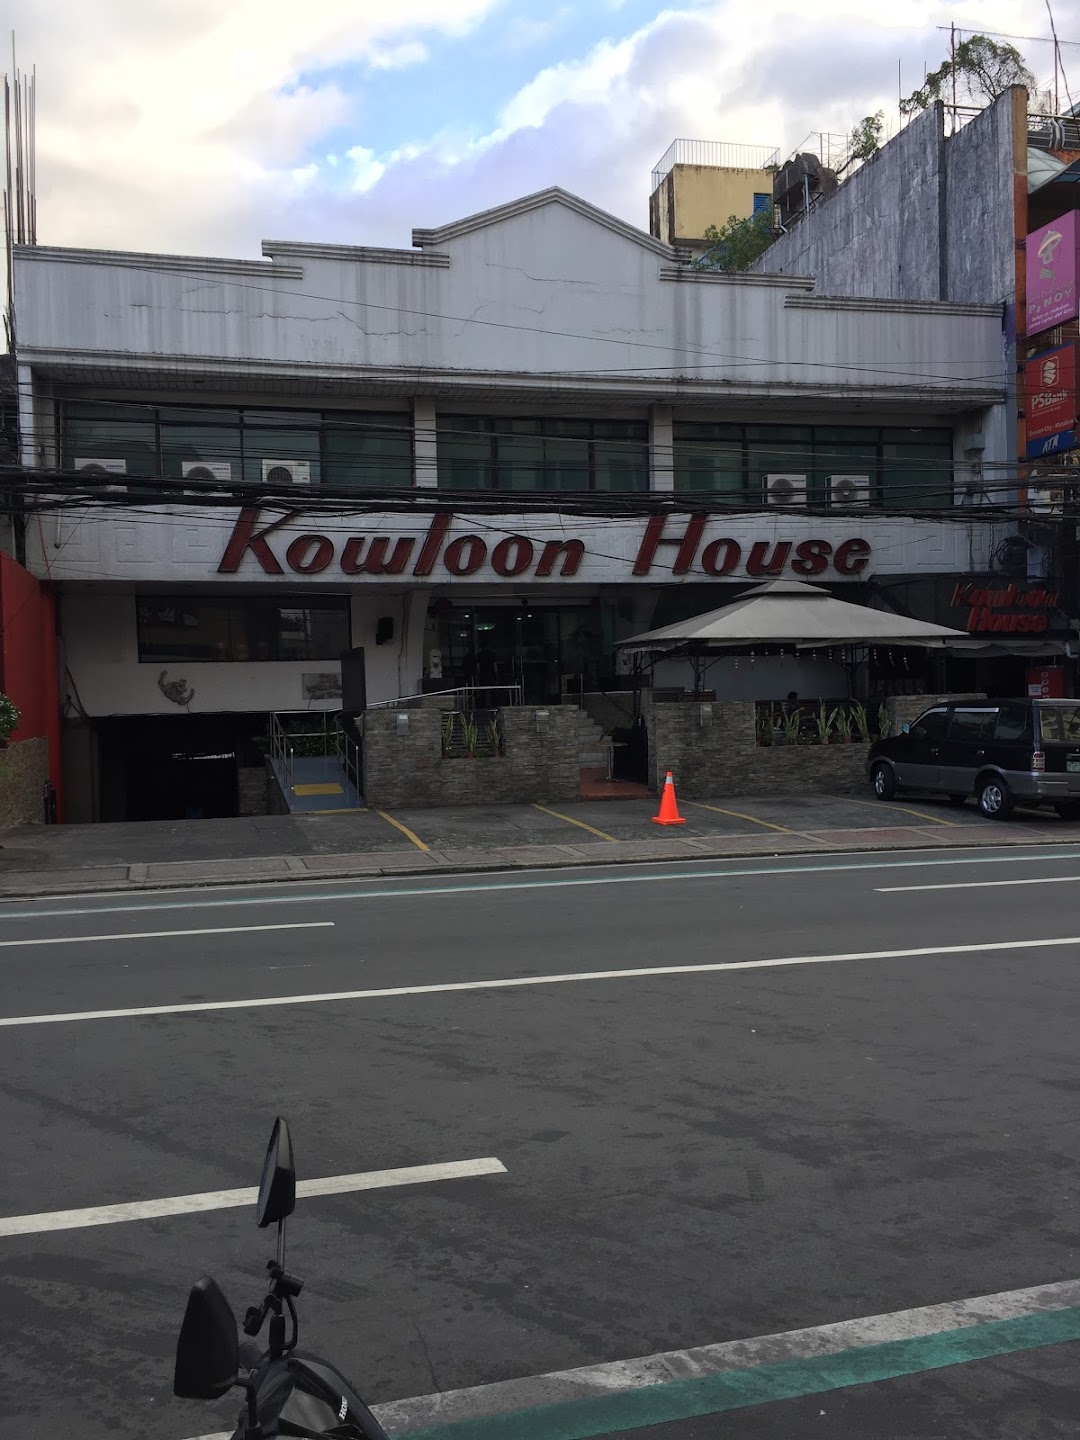 Kawloon house